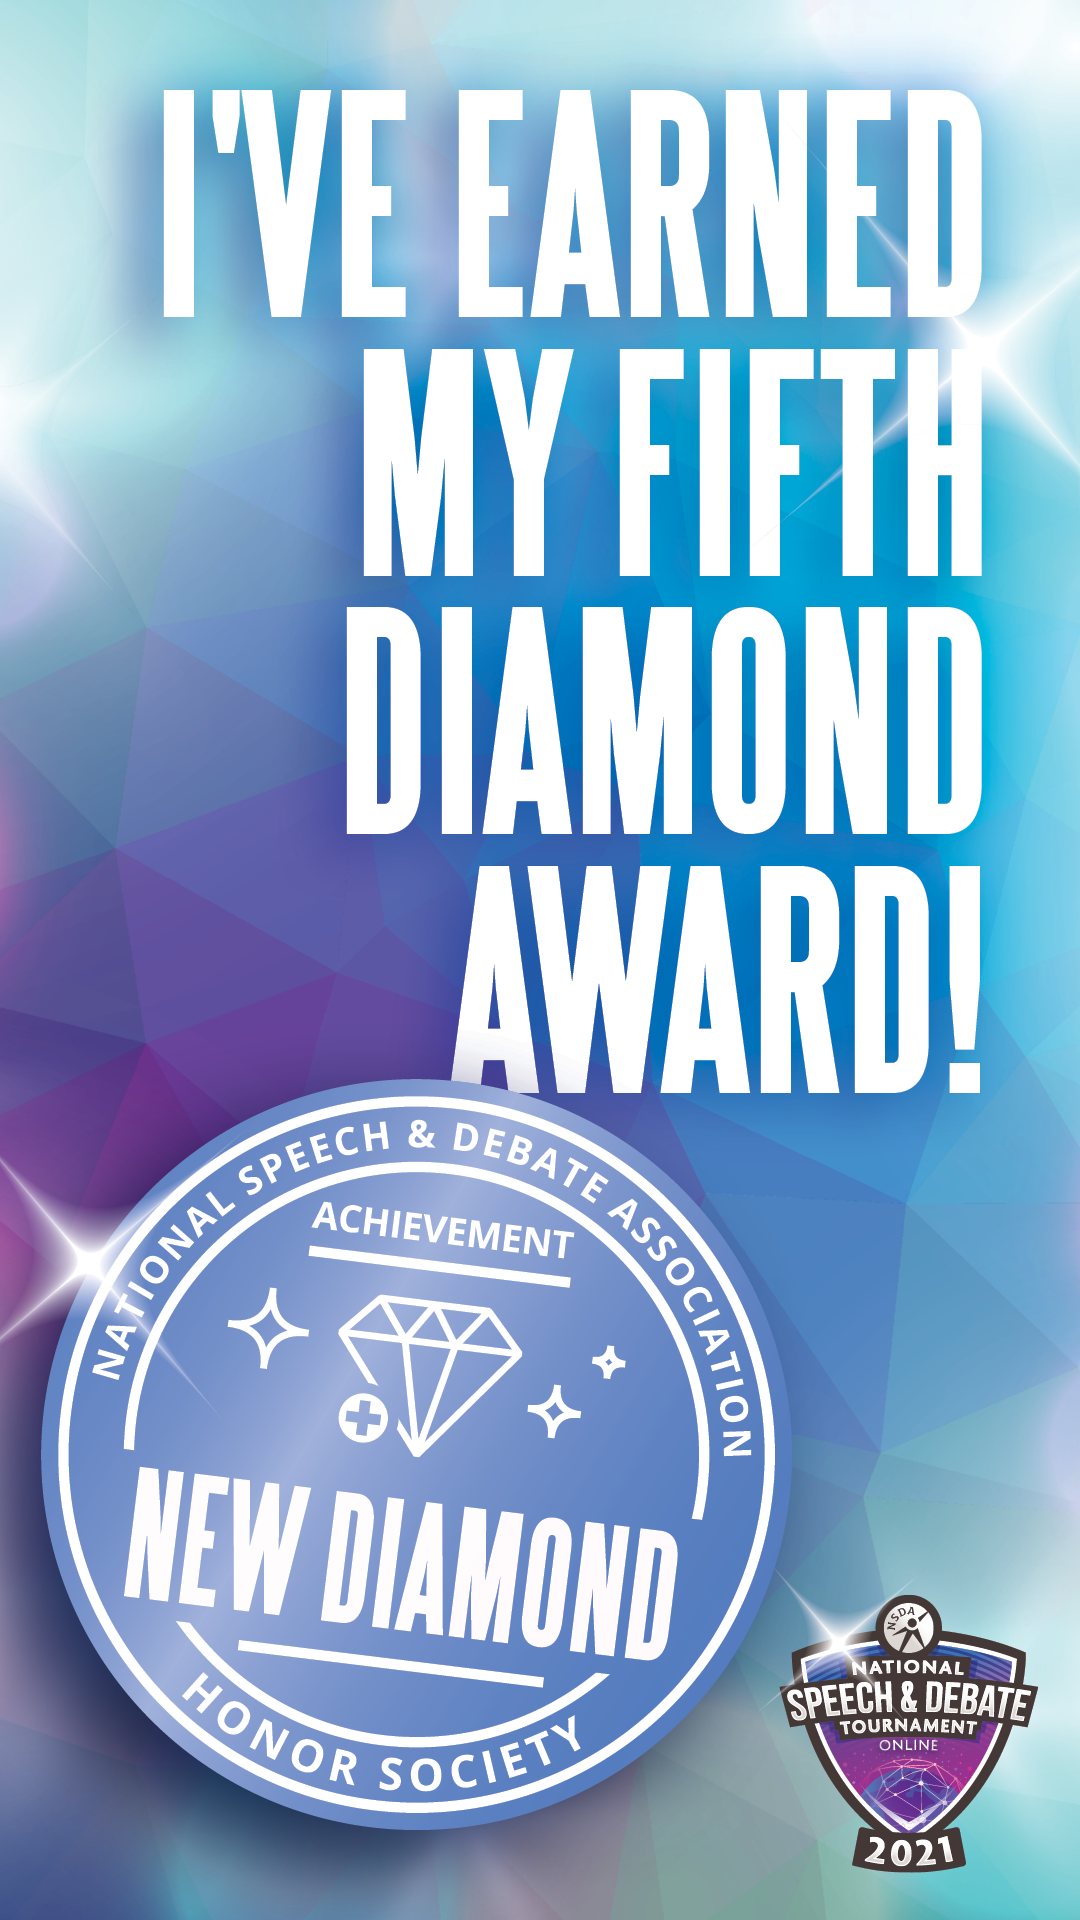 I've Earned My Fifth Diamond Award!